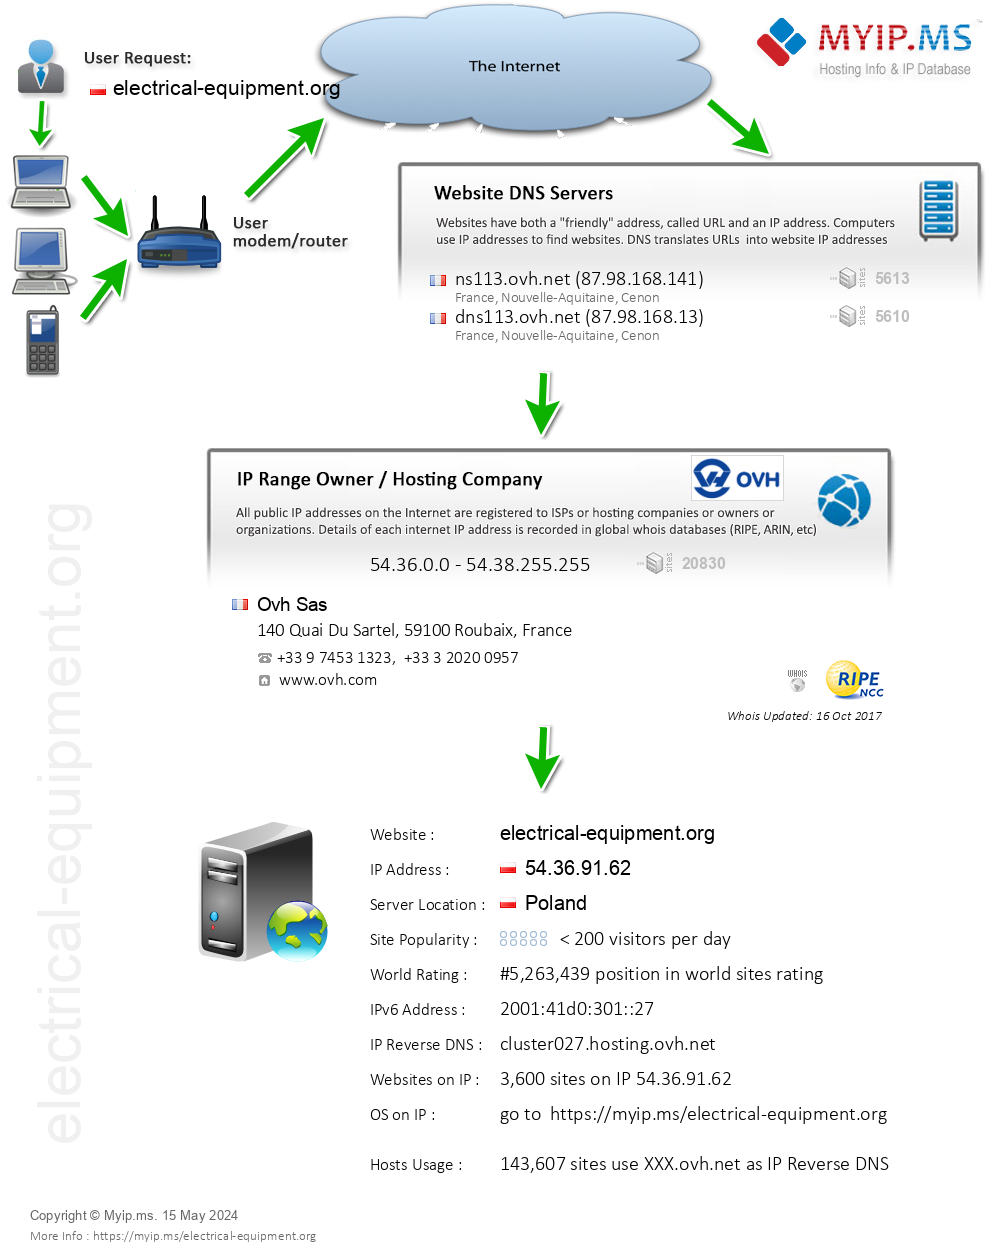 Electrical-equipment.org - Website Hosting Visual IP Diagram